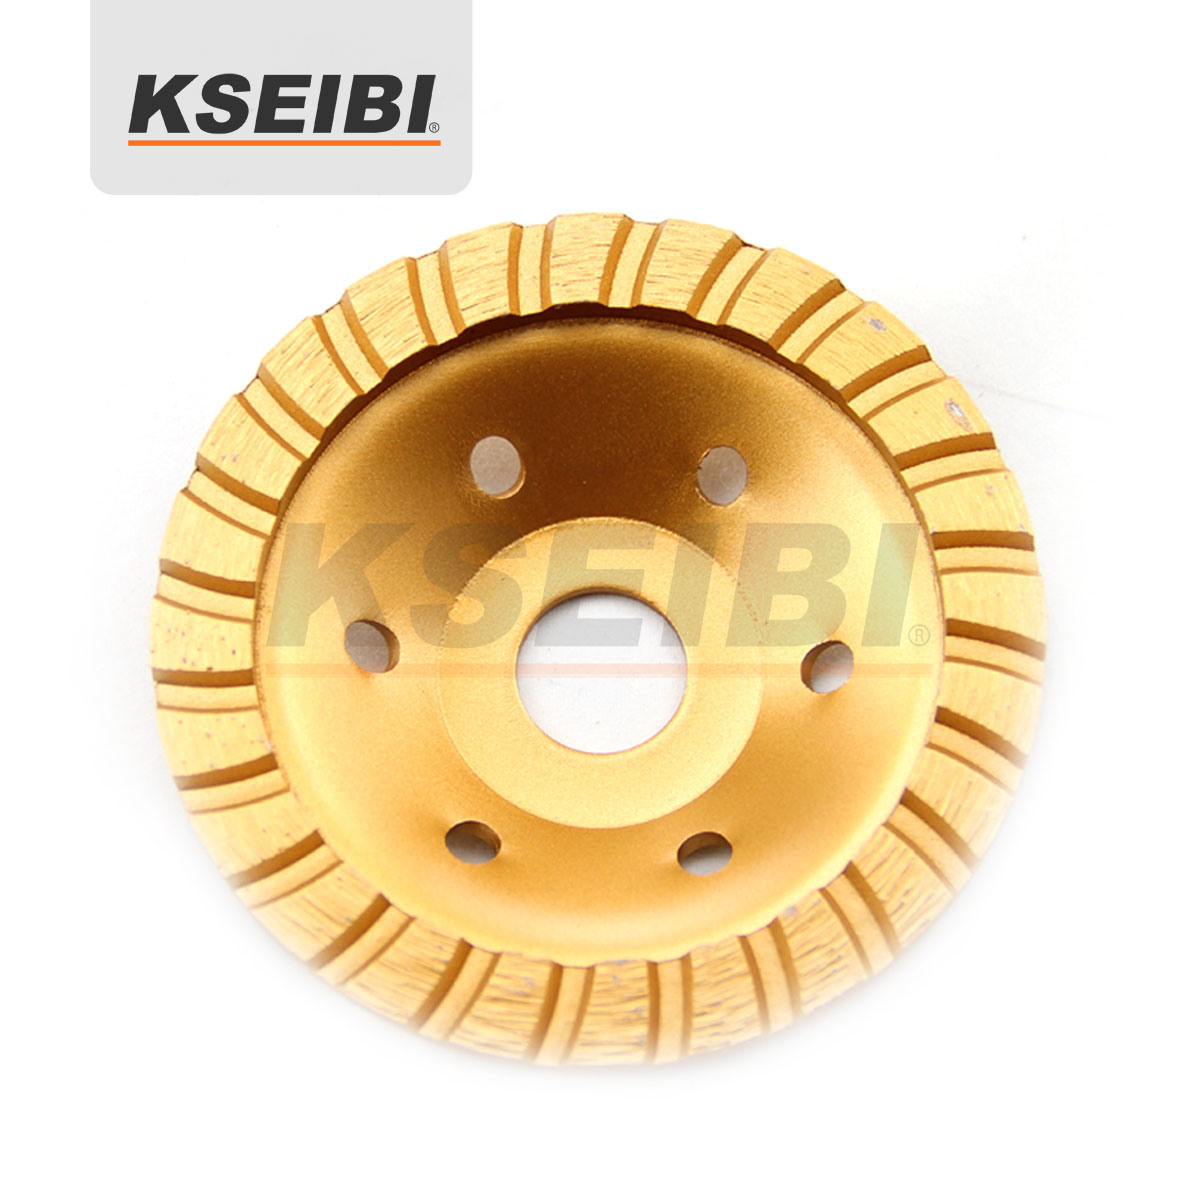 Kseibi Super Turbo Kseibi Diamond Grinding Cup Wheel